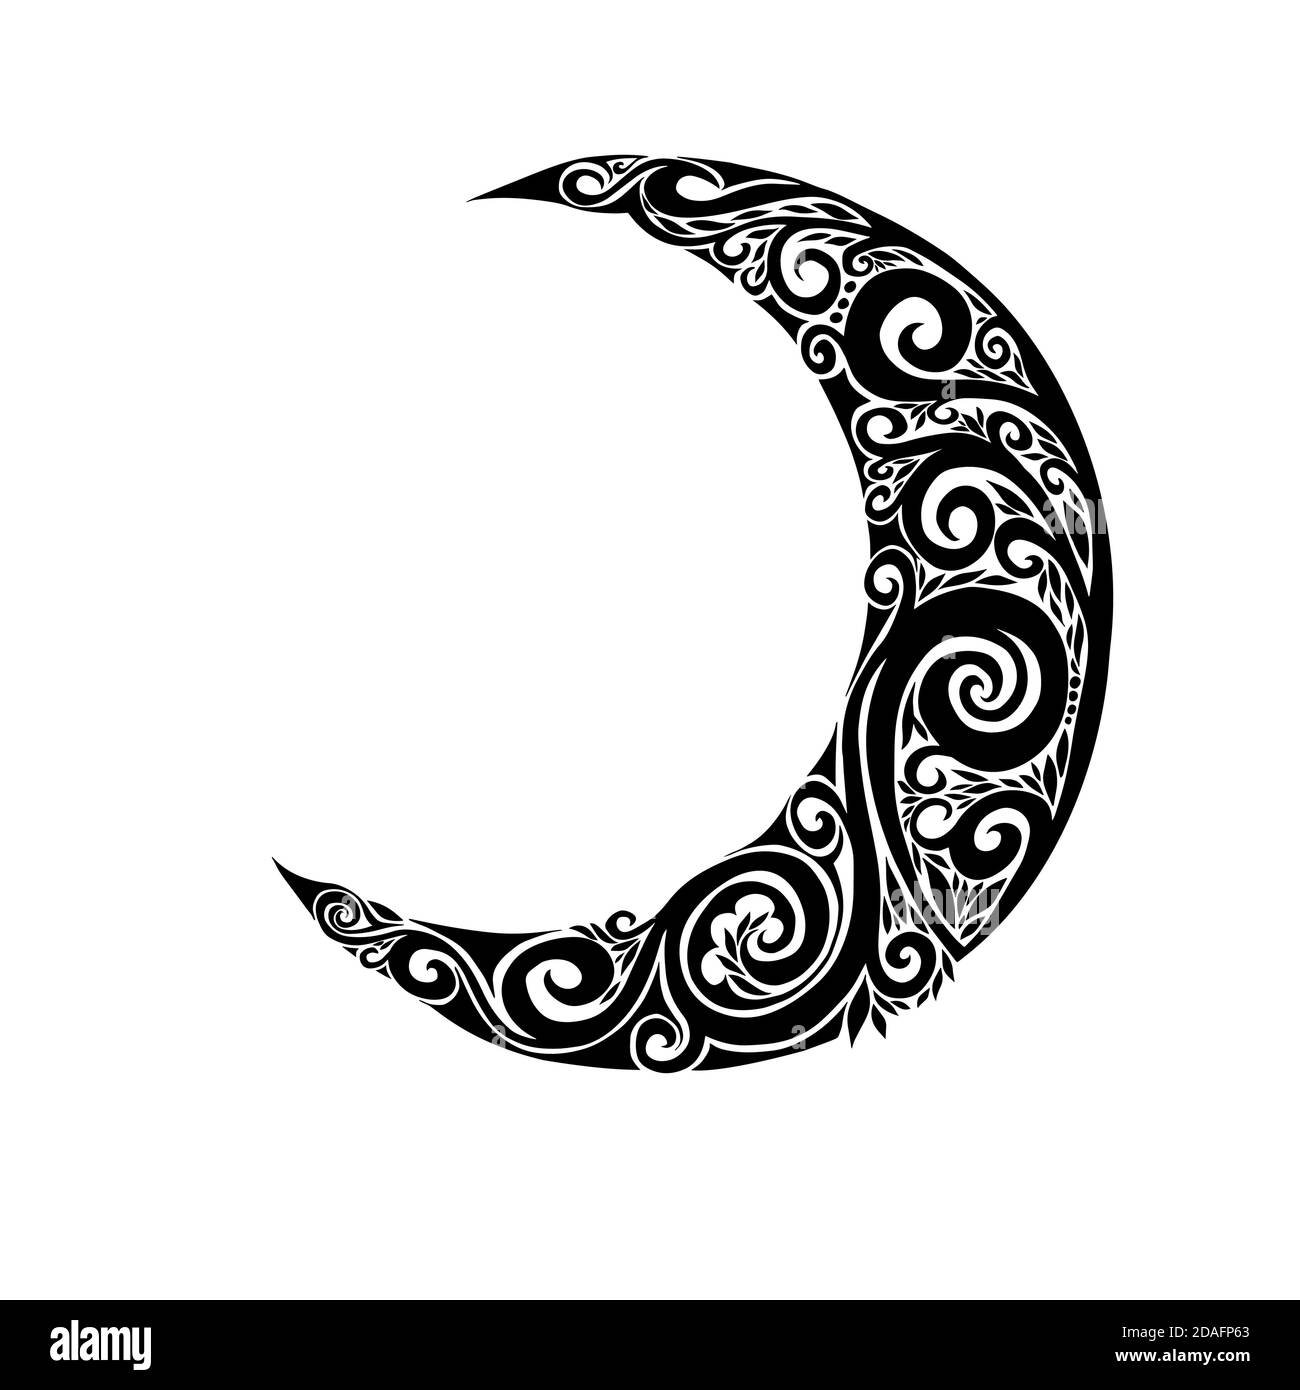 moon icon isolated on white background. Ramadan Kareem. The moon with patterns. Vector illustration Stock Vector